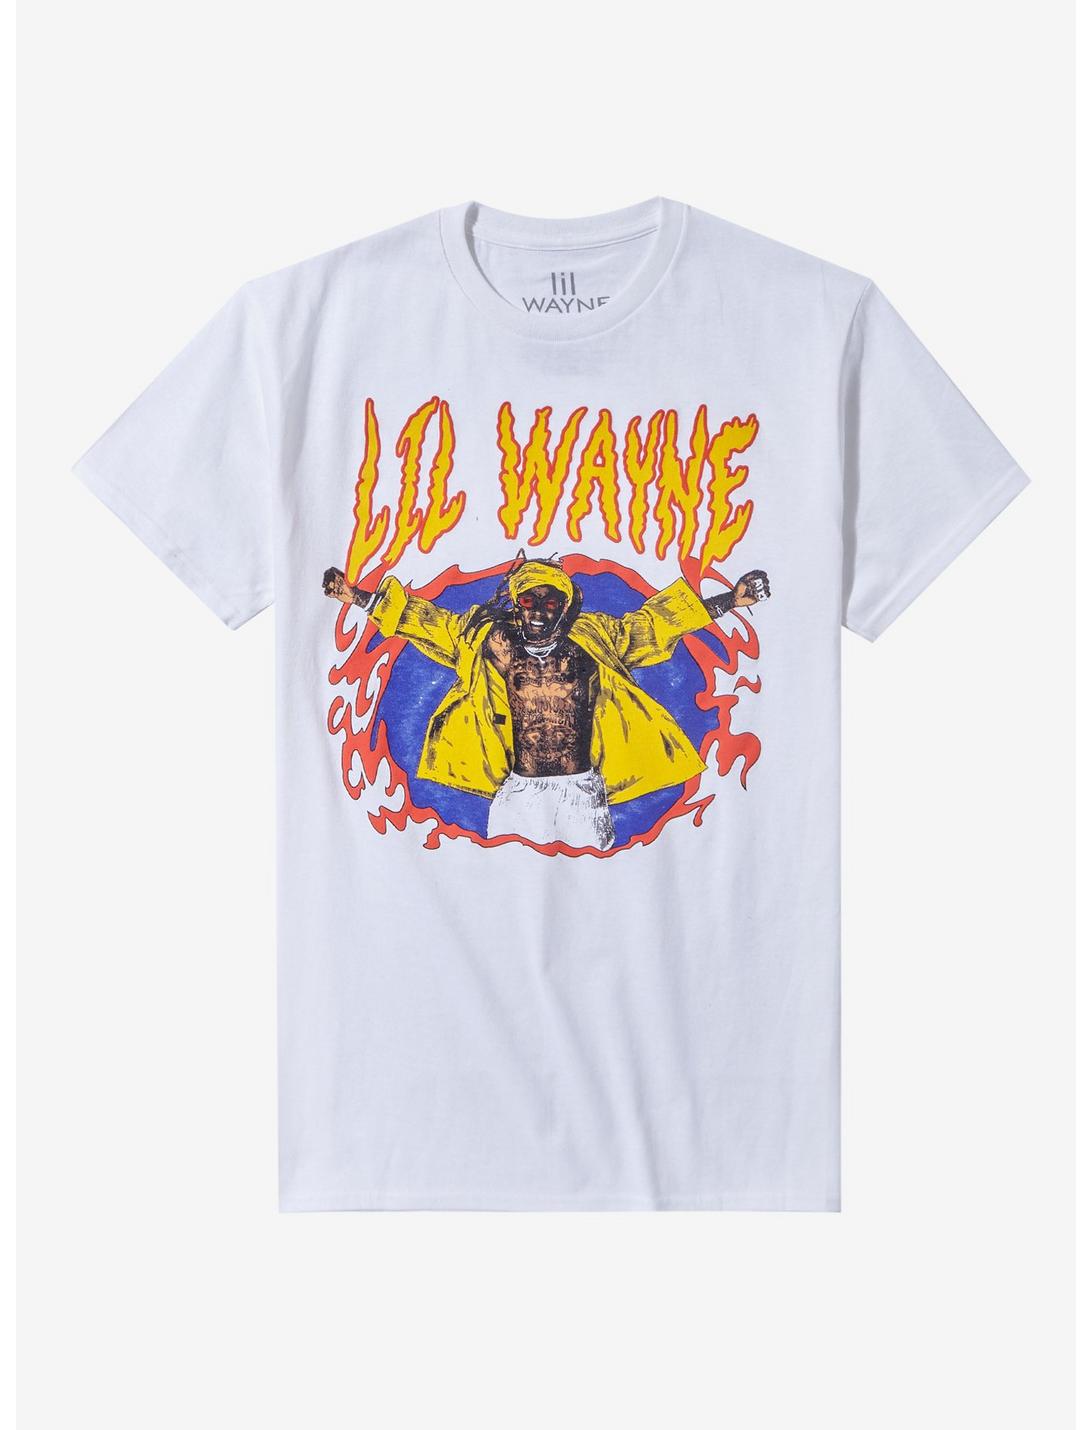 Lil Wayne Yellow Jacket Portrait Boyfriend Fit Girls T-Shirt, BRIGHT WHITE, hi-res